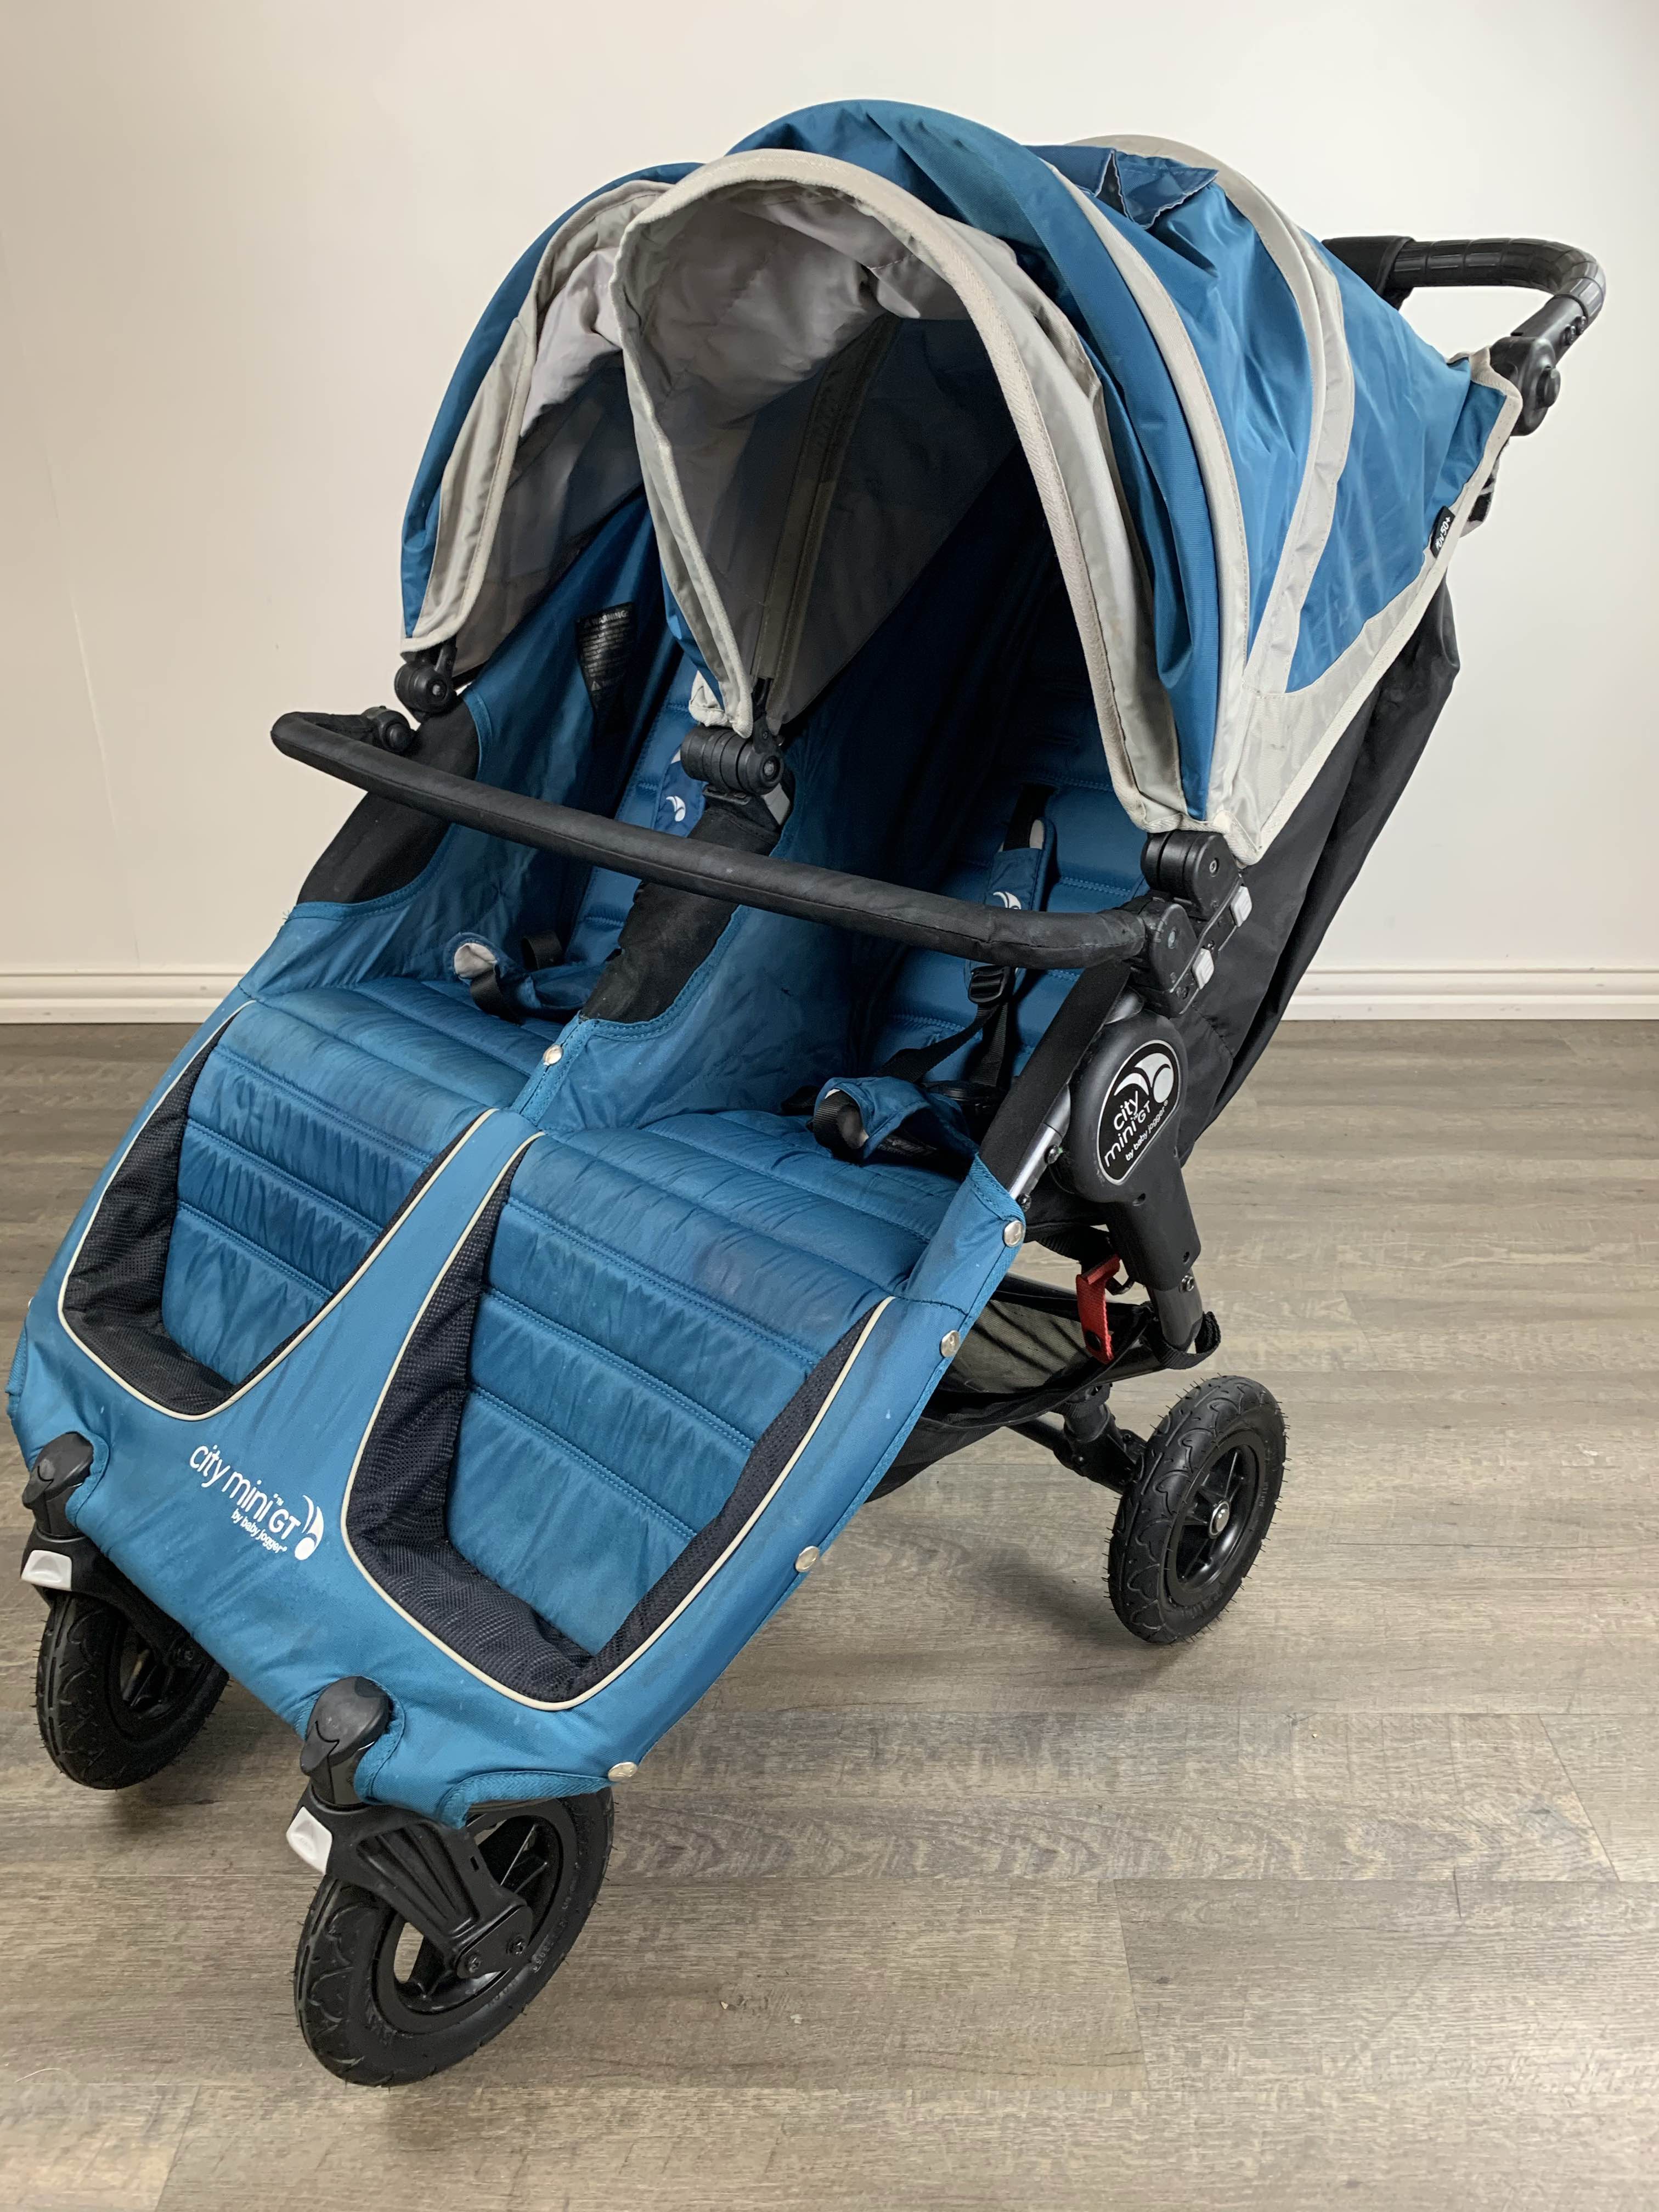 Baby Jogger City Mini GT Stroller, Teal/Gray, 2015